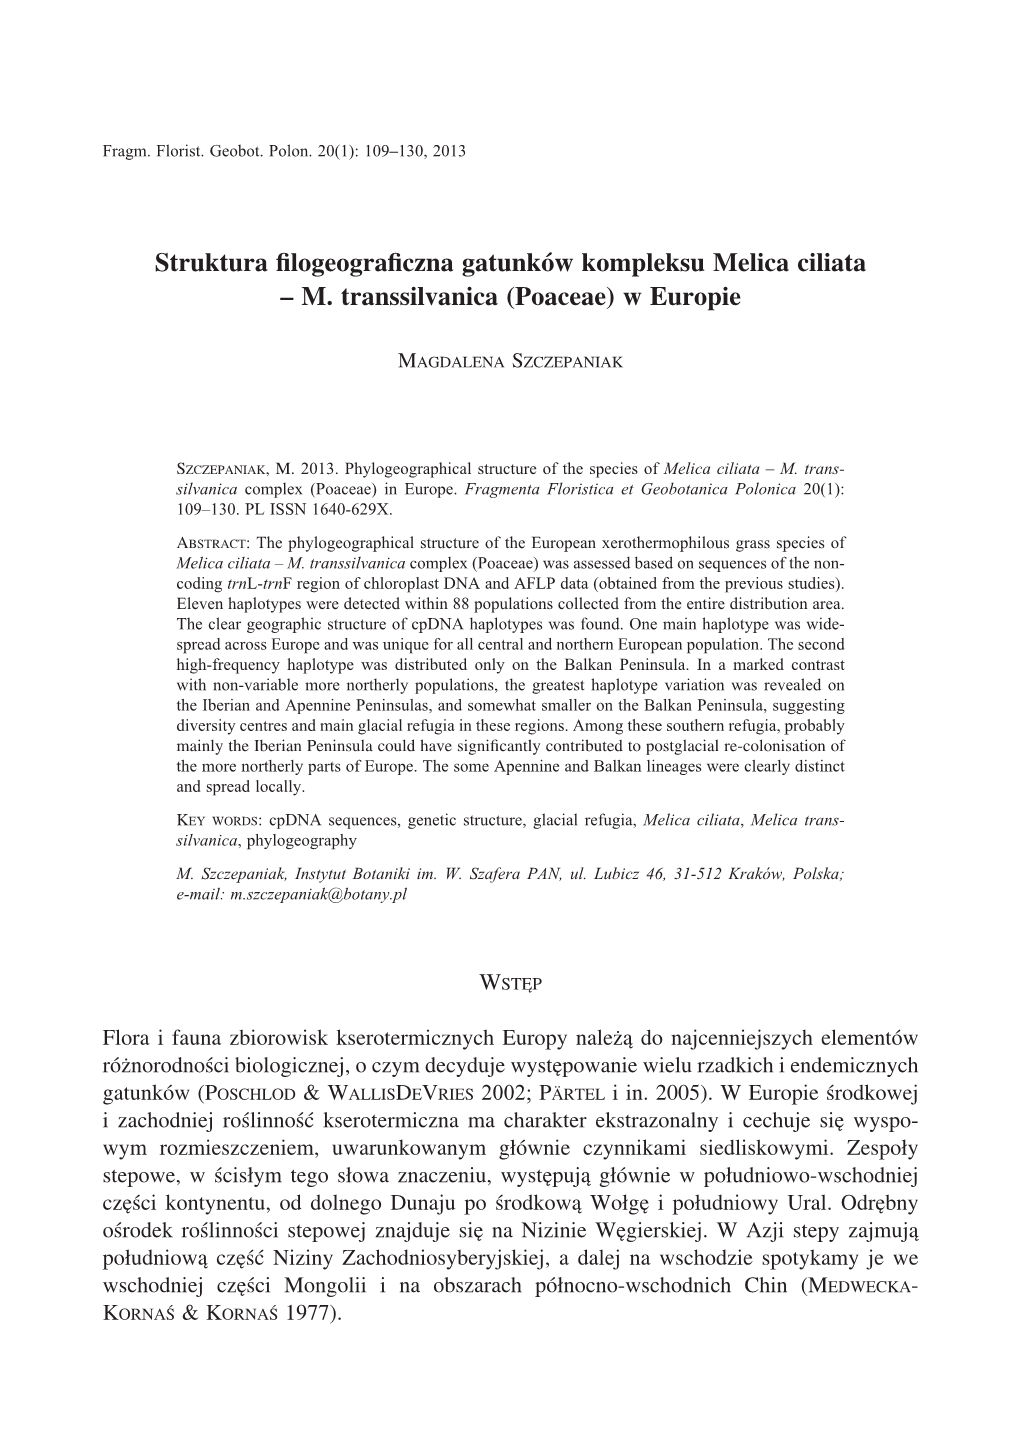 Struktura Filogeograficzna Gatunków Kompleksu Melica Ciliata – M